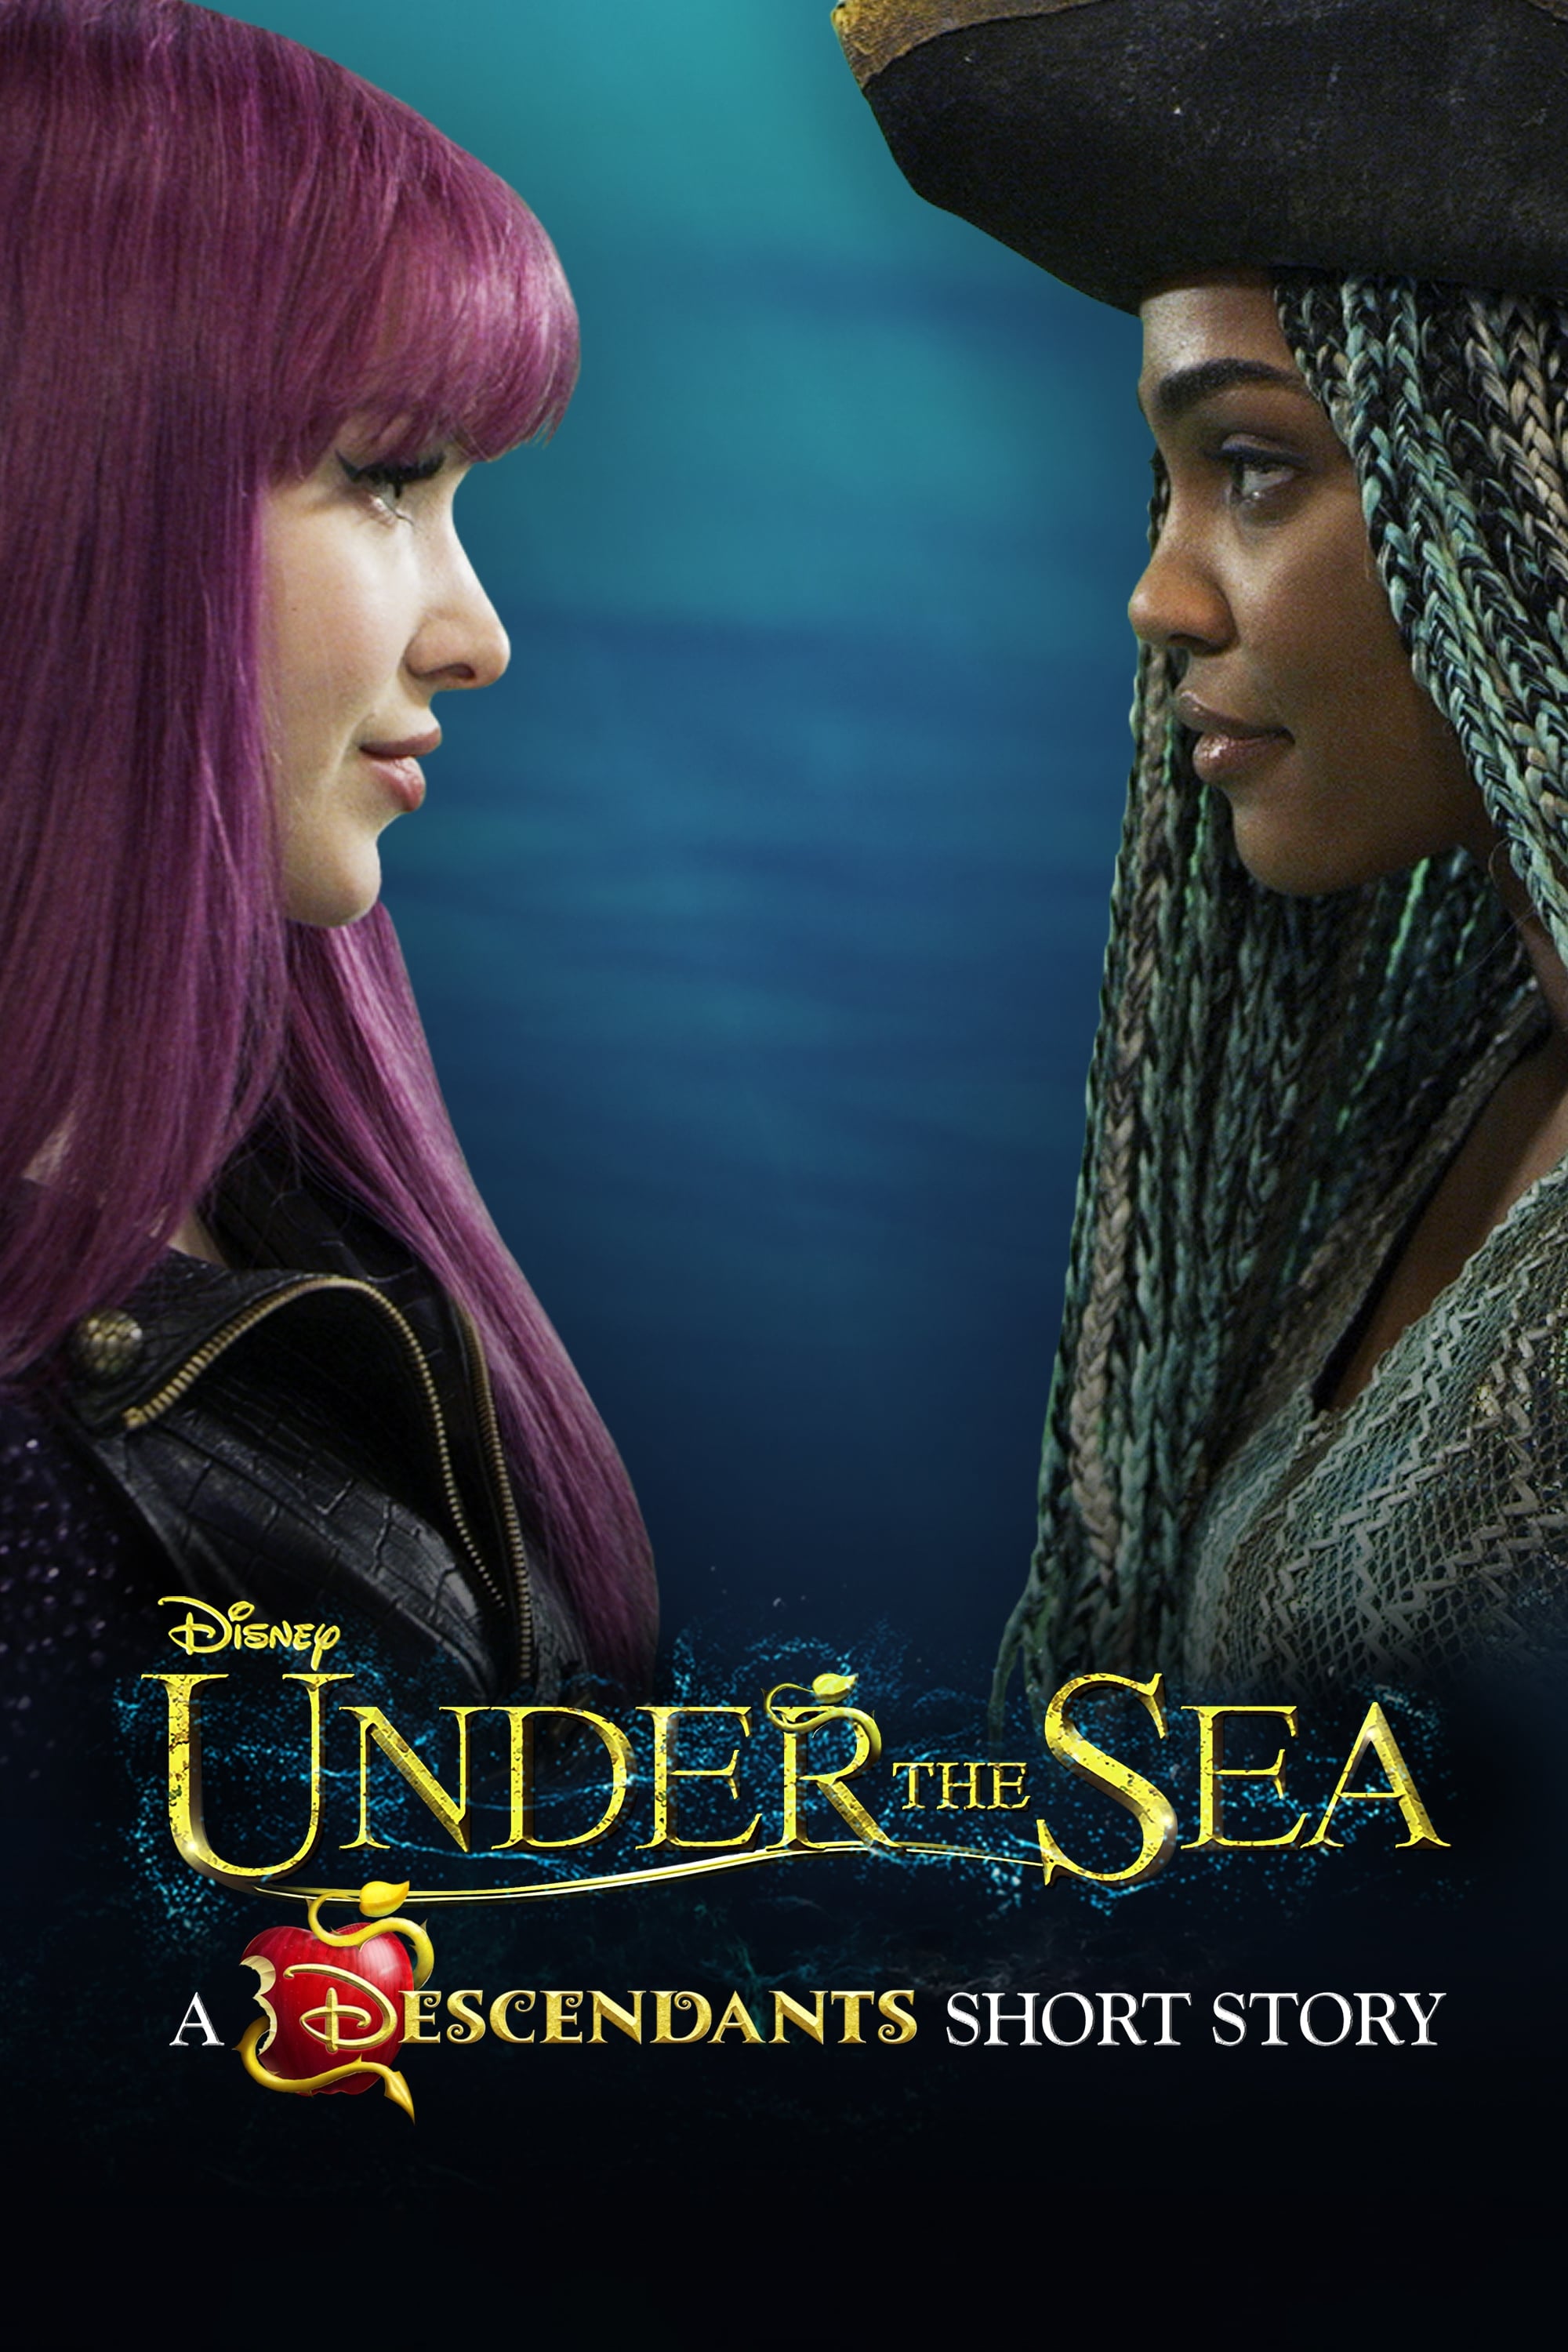 Under the Sea: A Descendants Story (2018)